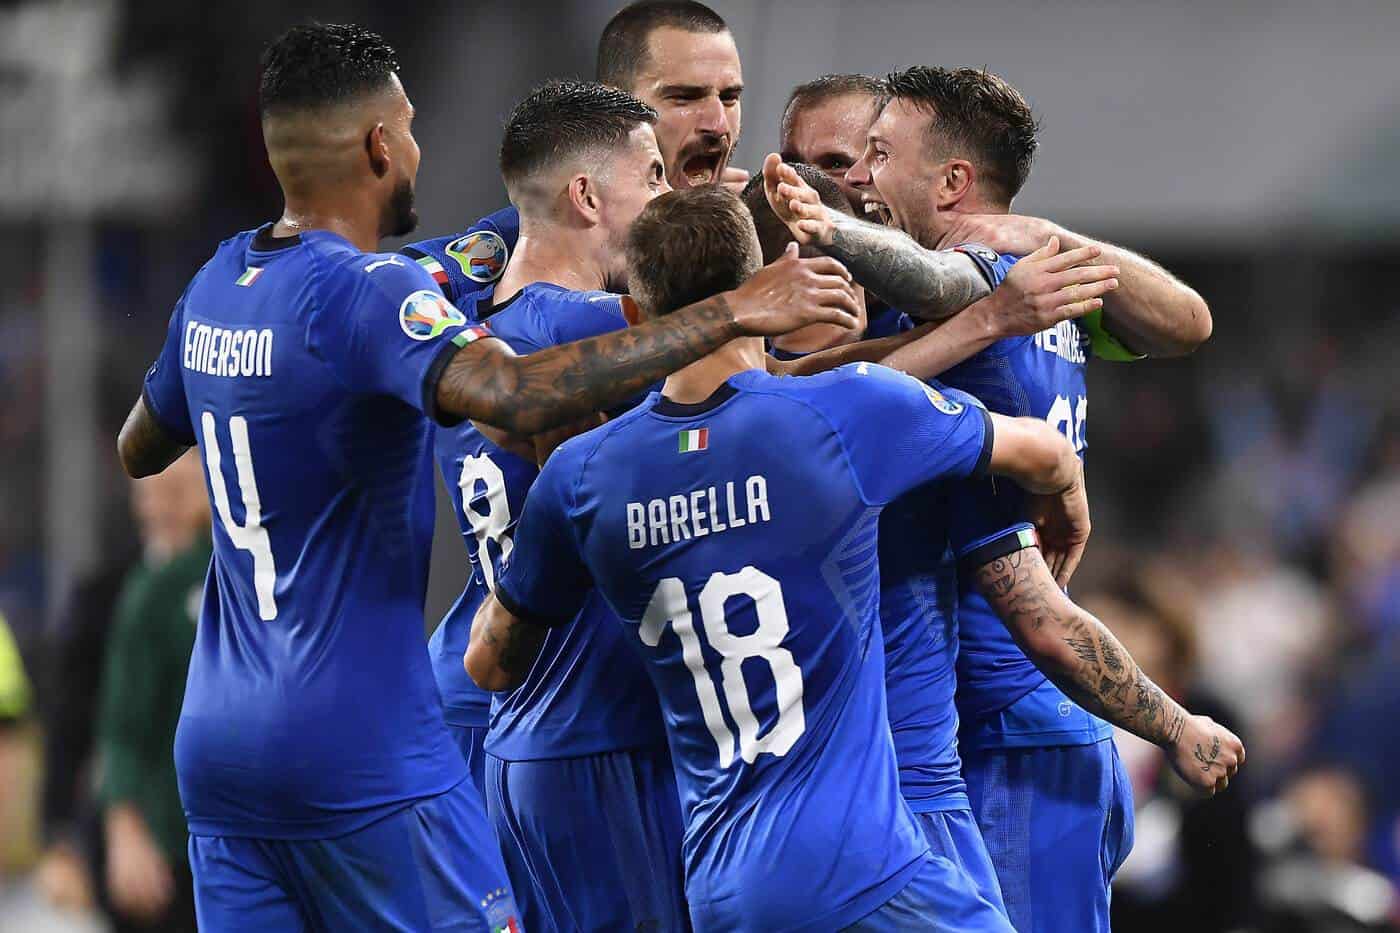 Italia vs Bosnia ed Erzegovina - Qualificazioni Euro 2020